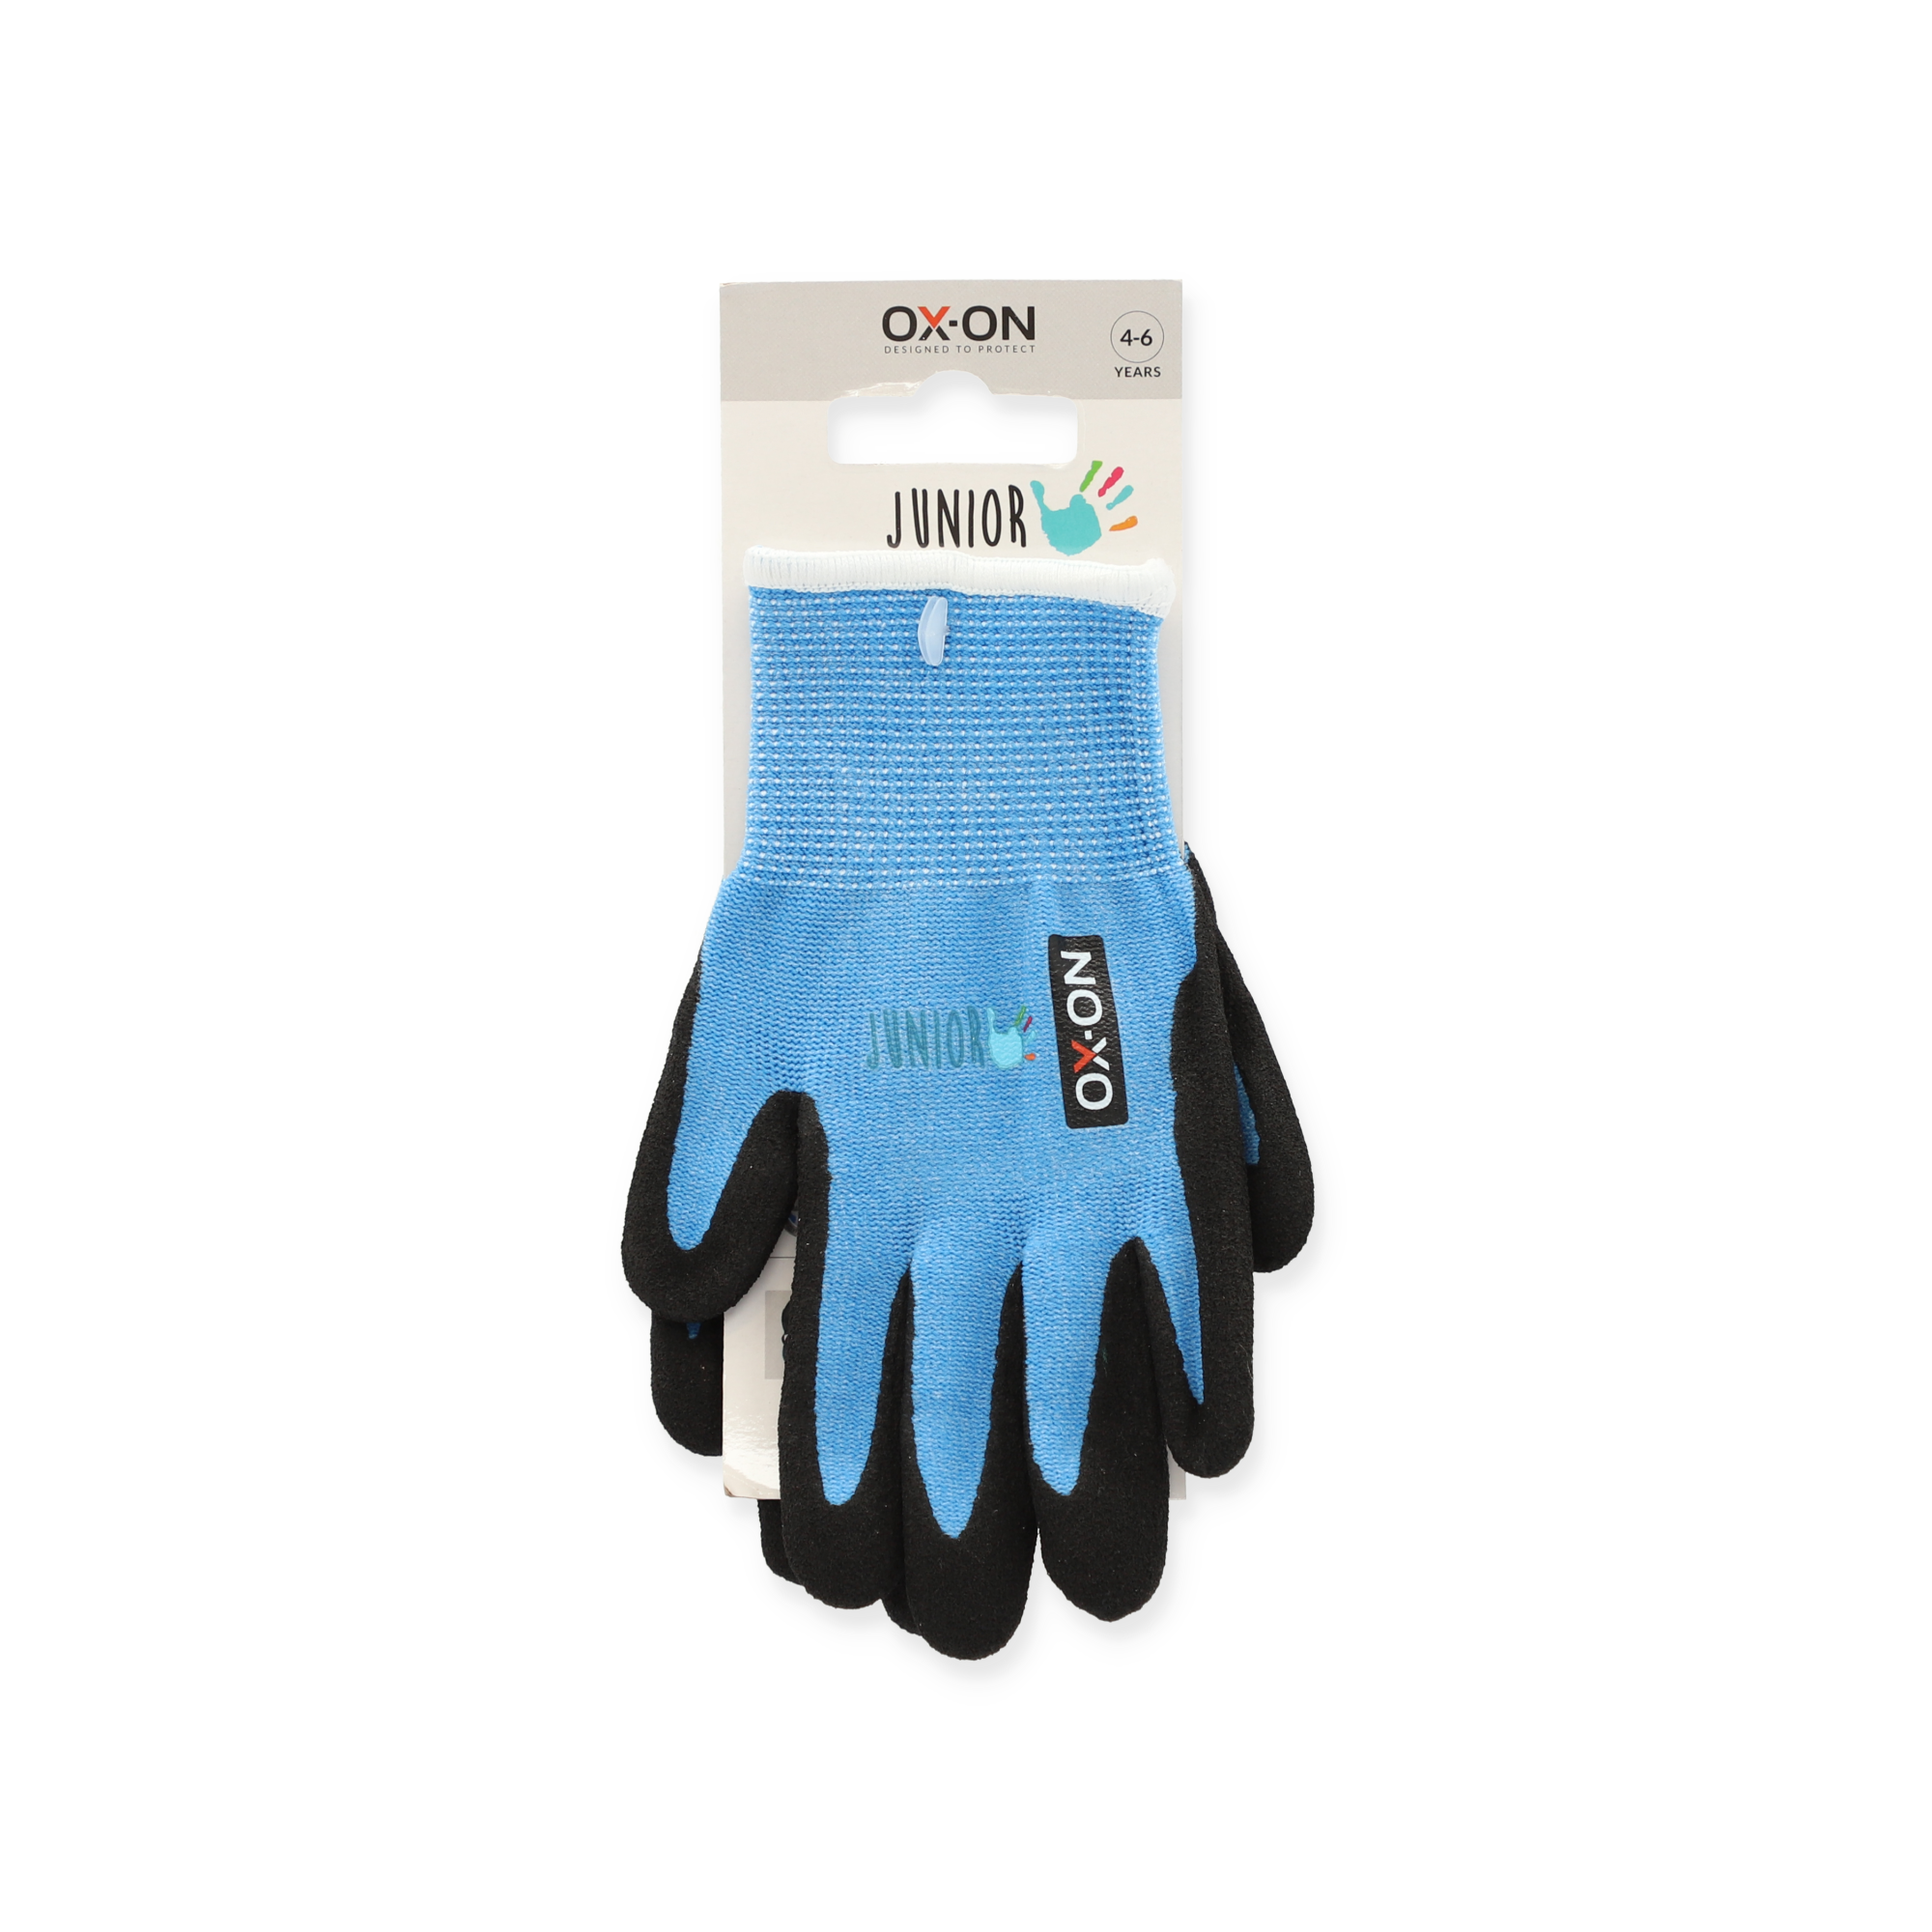 Handschuhe 'Junior 10000' blau 4-6 Jahre + product picture